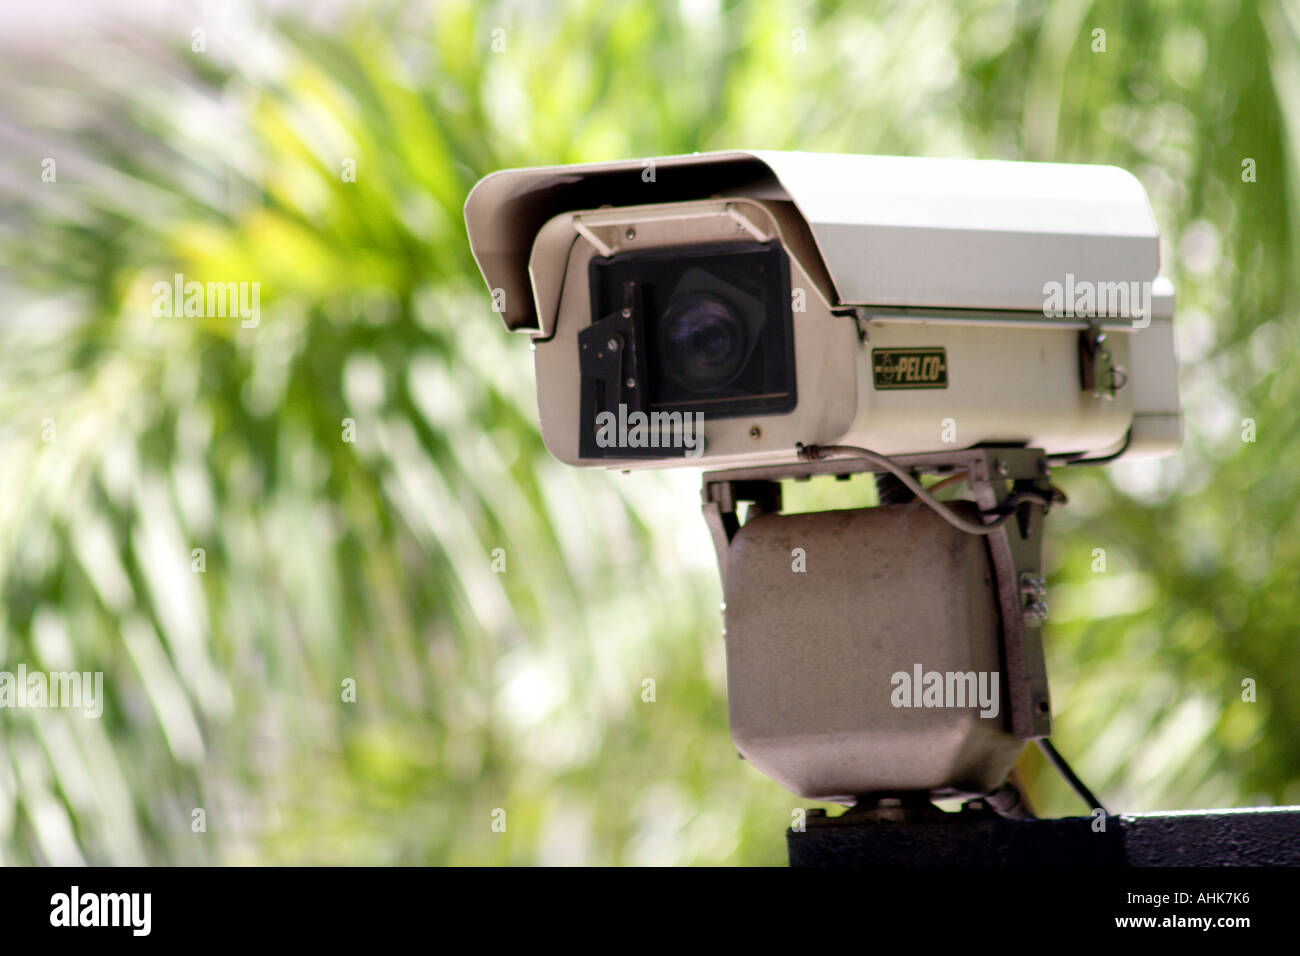 Remote Surveillance Video Security Camera Recorder Stock Photo